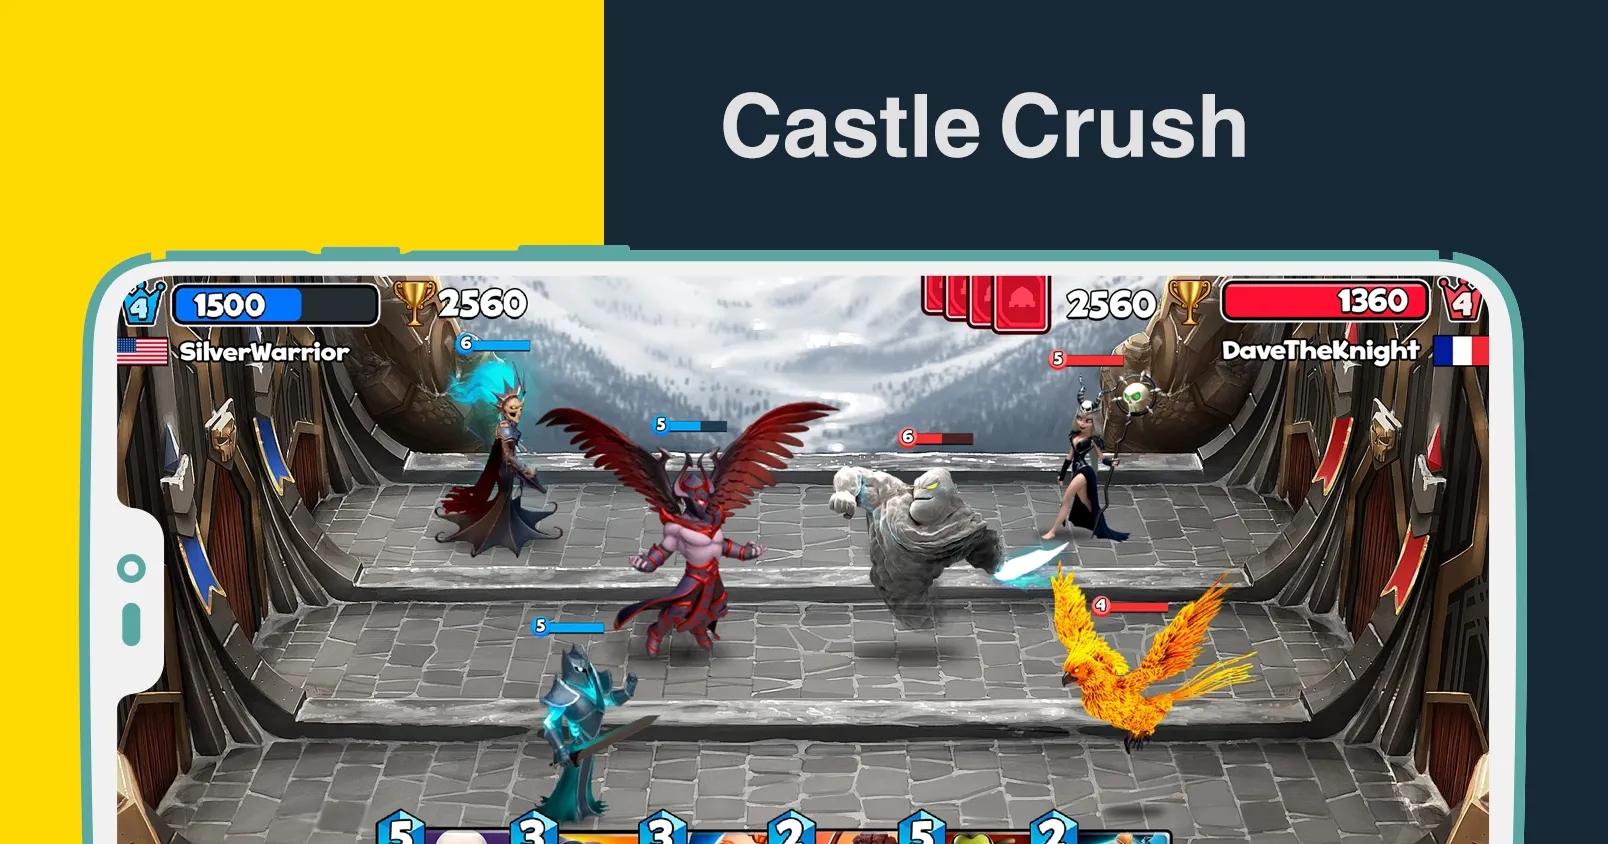 castle crush مهكرة
تحميل لعبة castle crush مهكرة اخر اصدار
تحميل لعبة castle crush مهكرة من ميديا فاير
تنزيل لعبة castle crush مهكرة